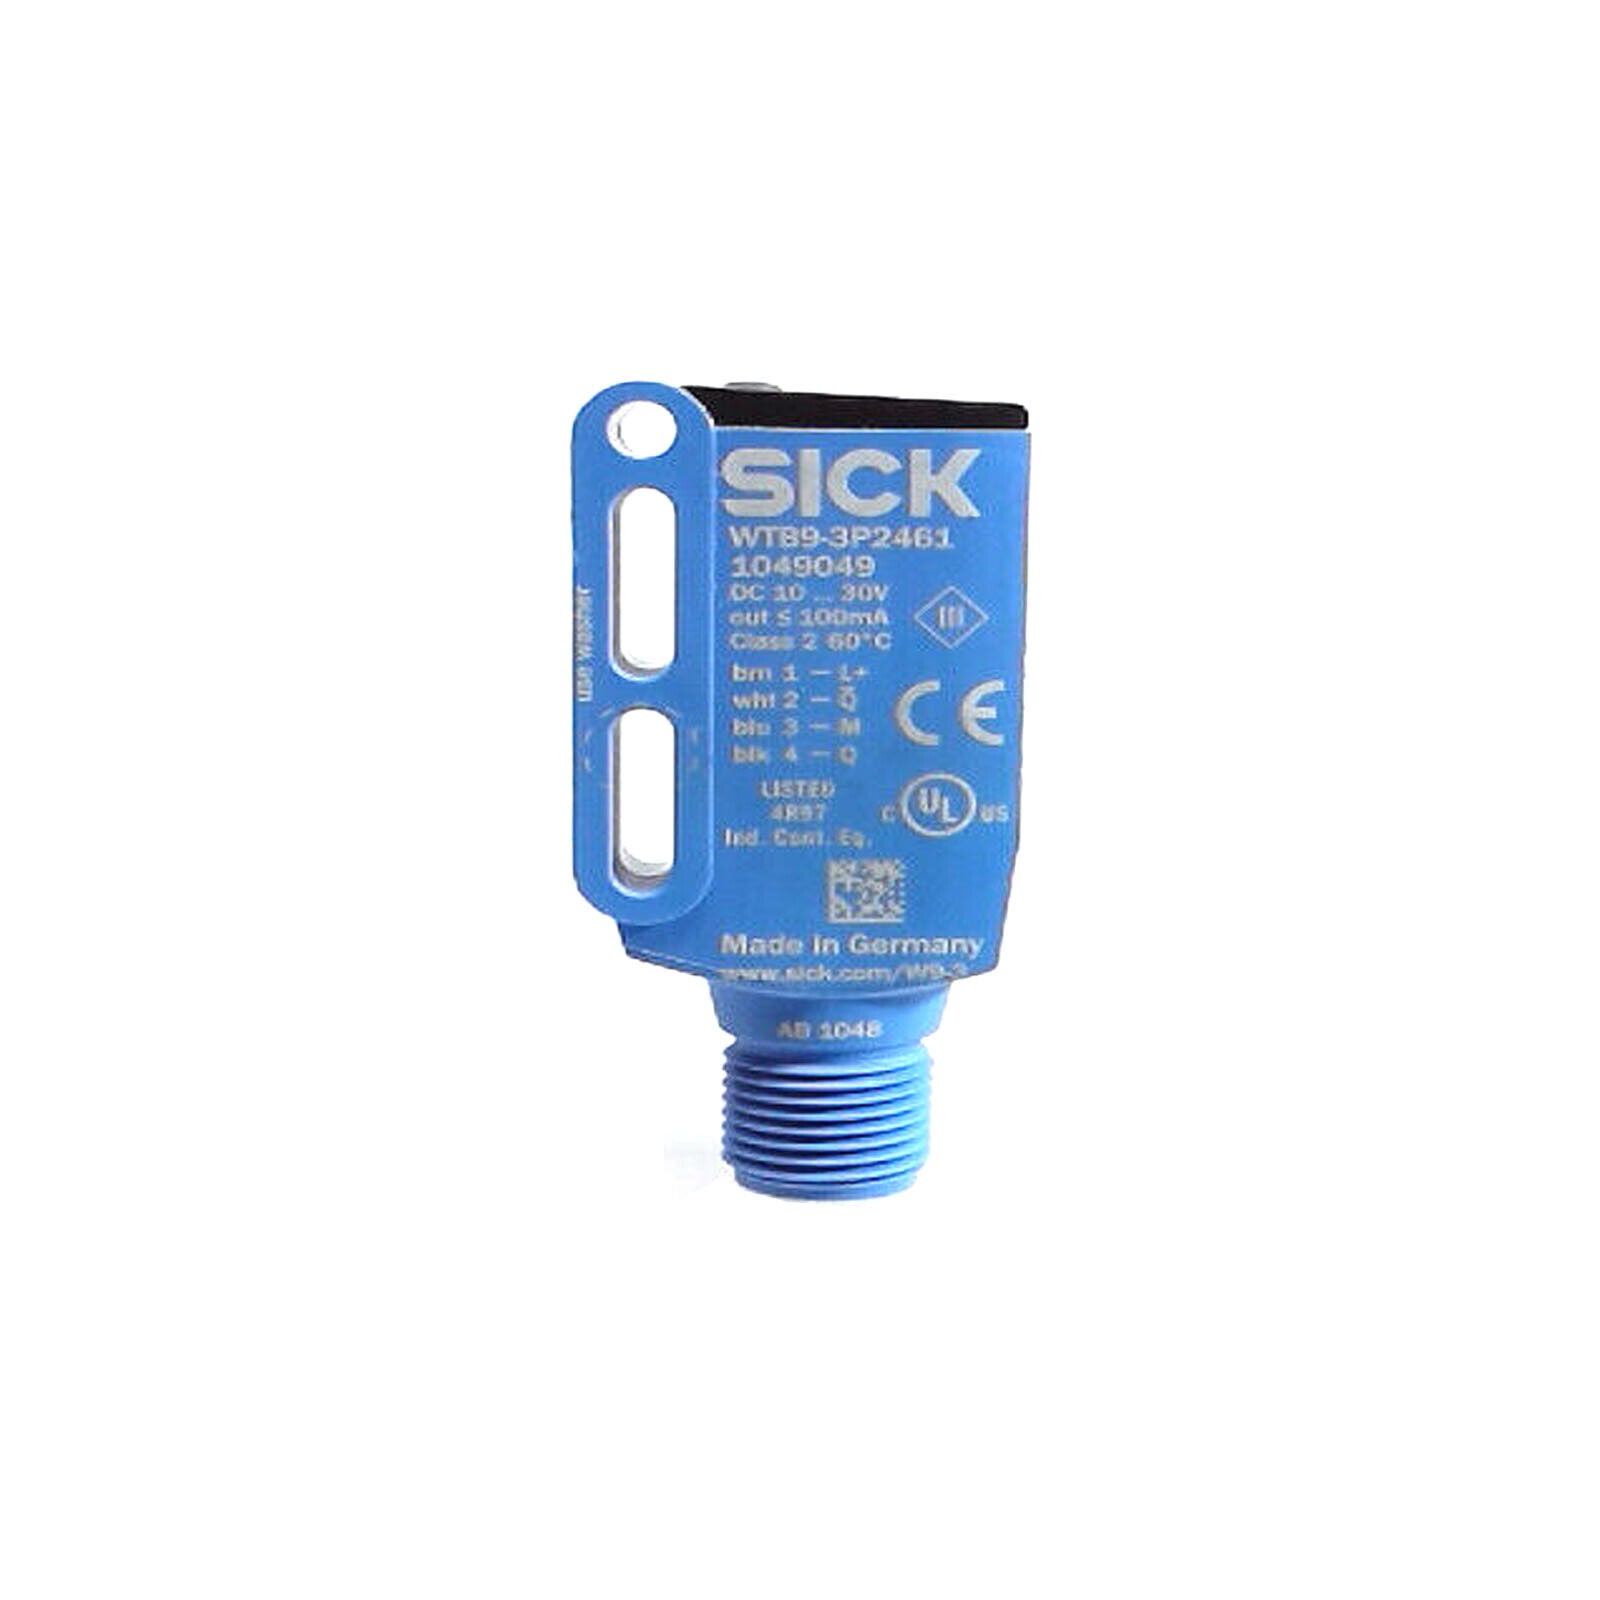 SICK WTB9-3P2461 Photoelectric Sensor